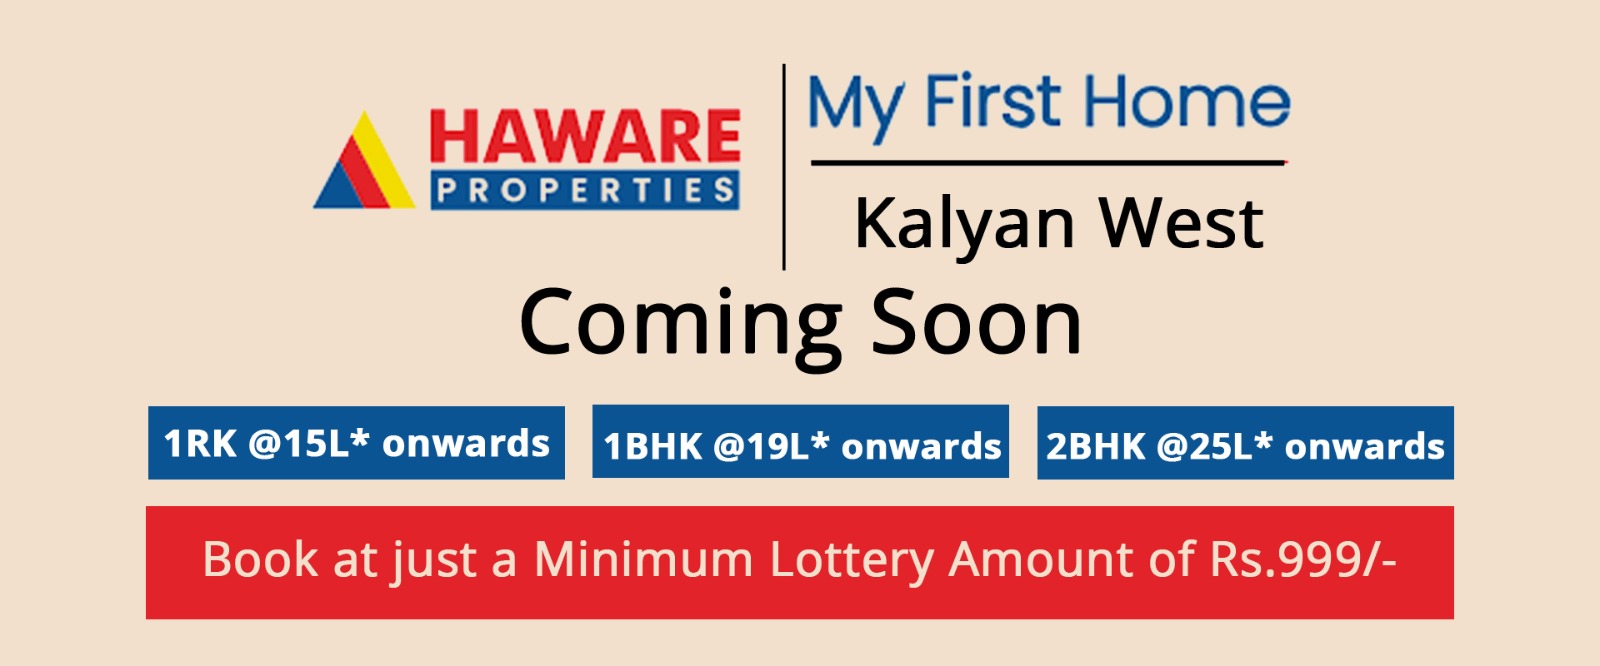 Haware My First Home Kalyan West | Flats In kalyan